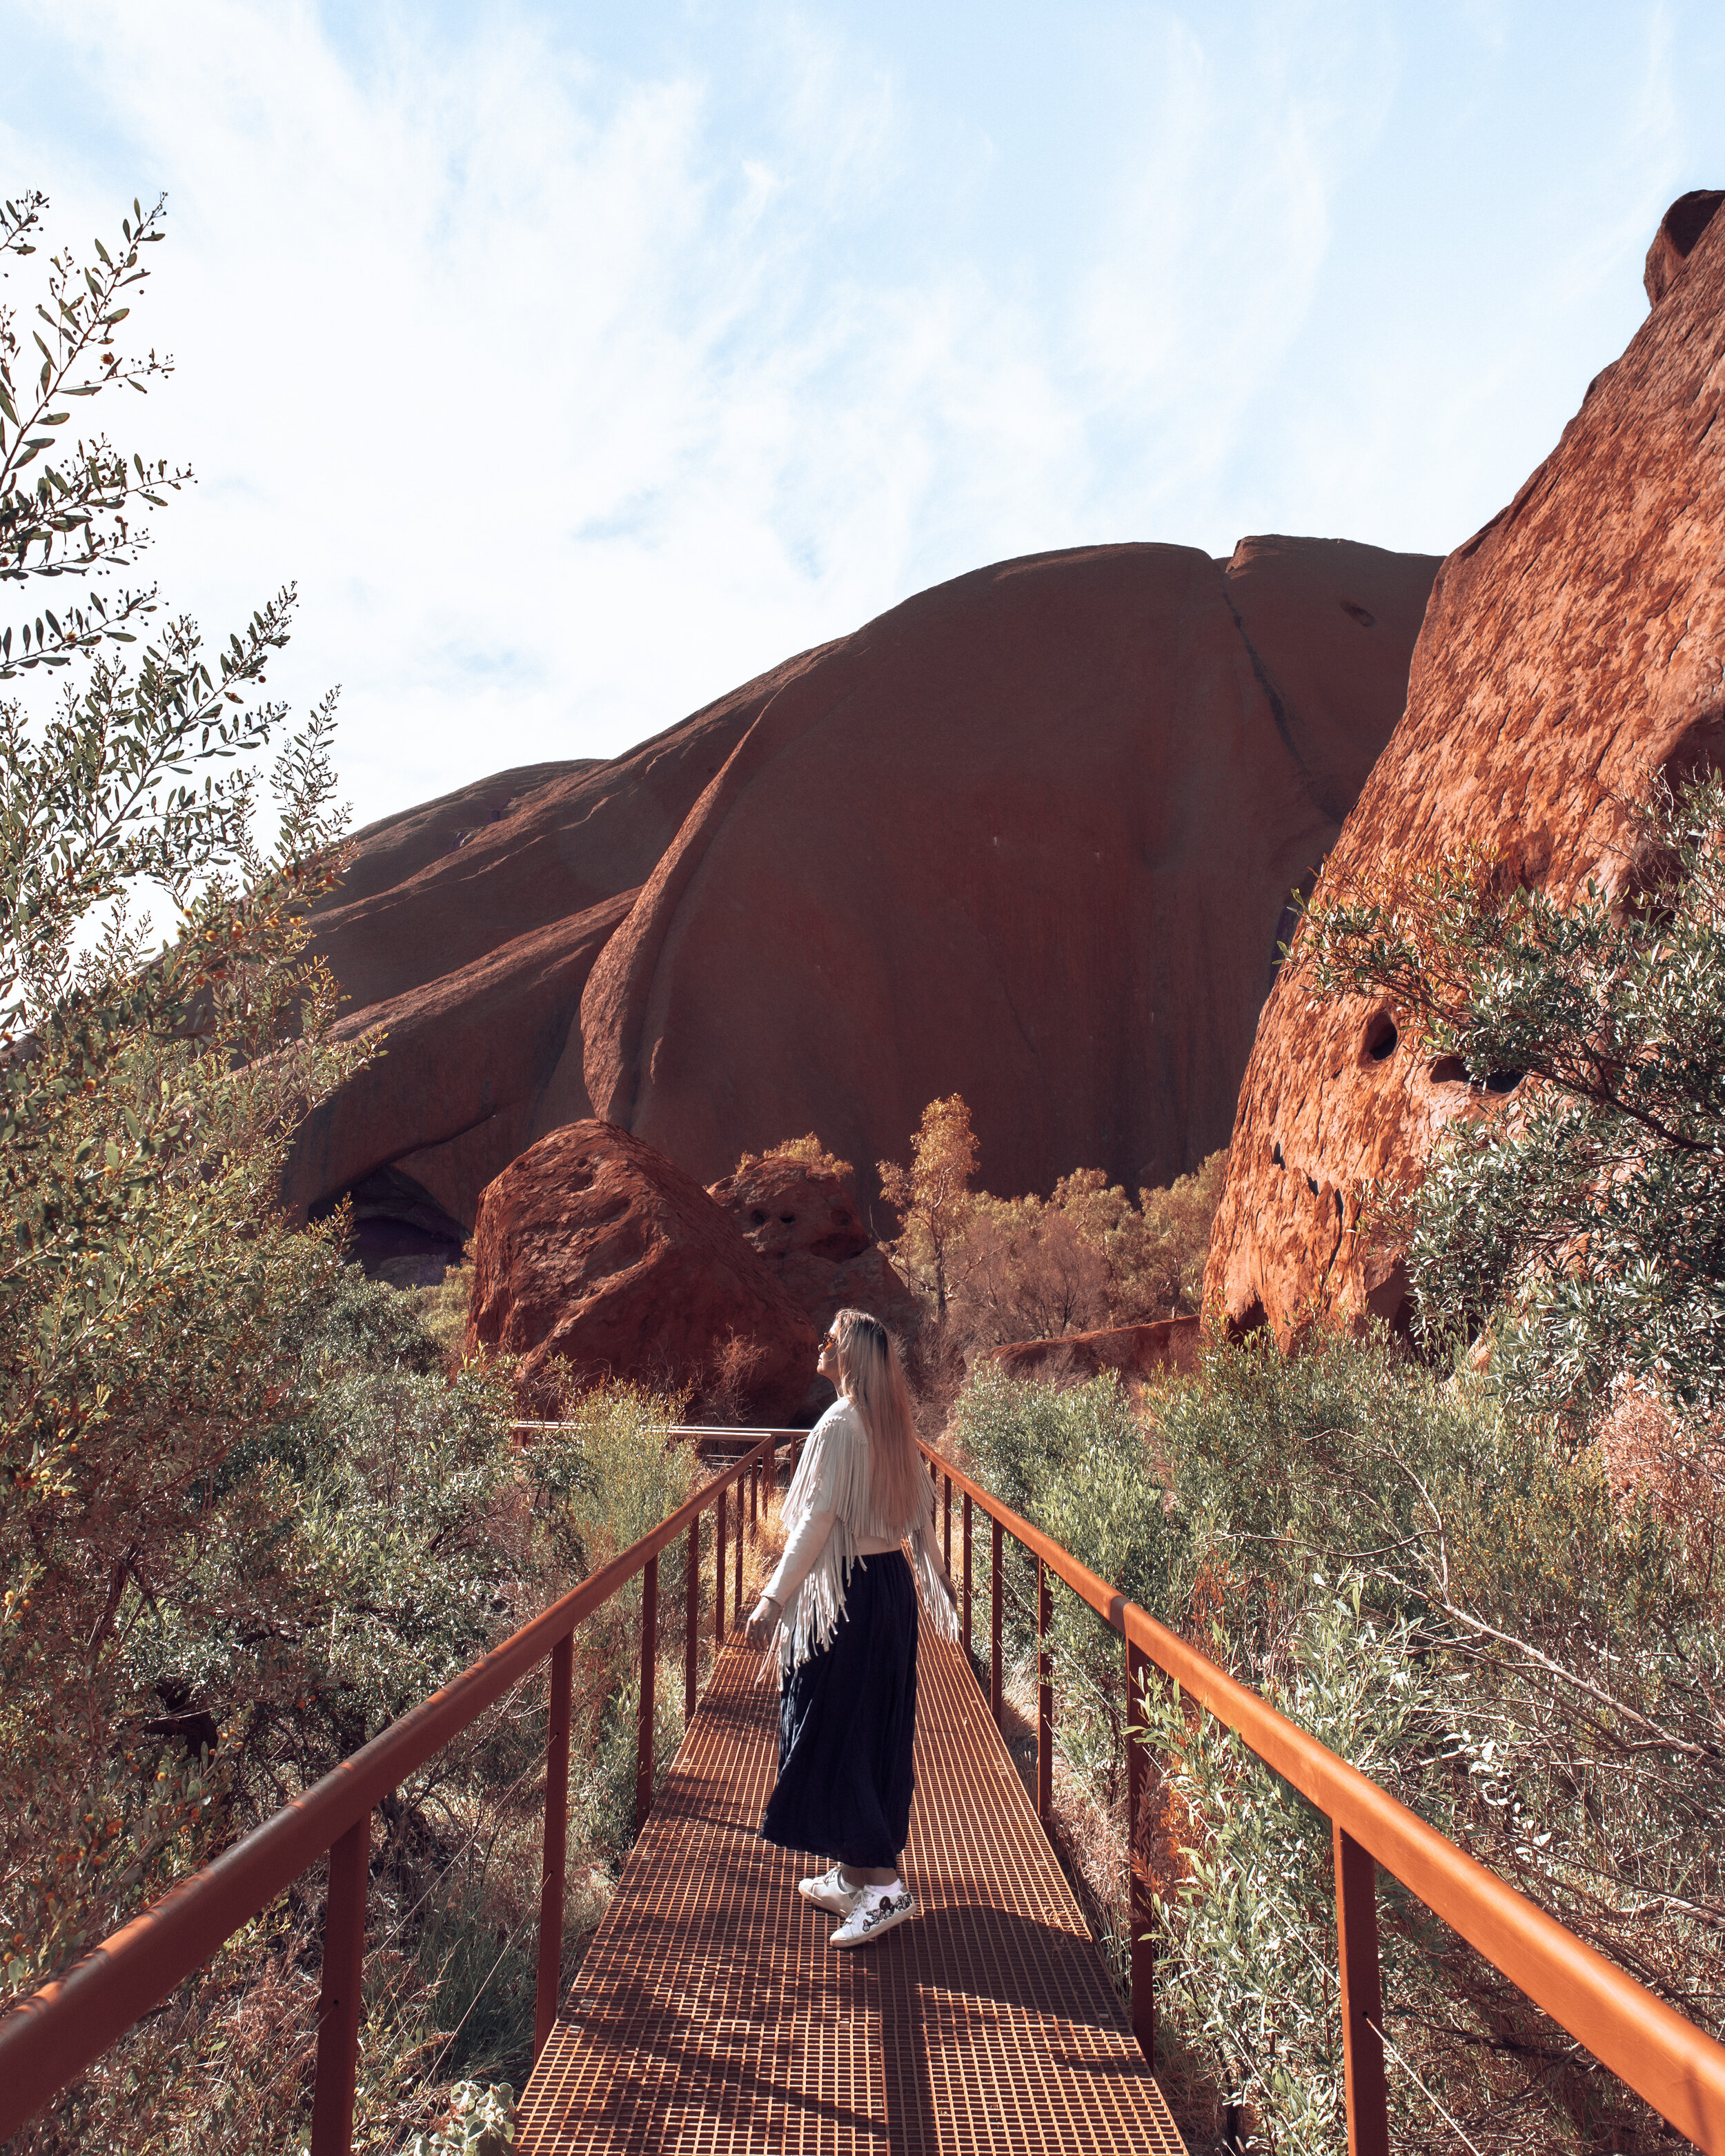 Walking down the bridge - Mala Walk - Uluru - Northern Territory - Australia